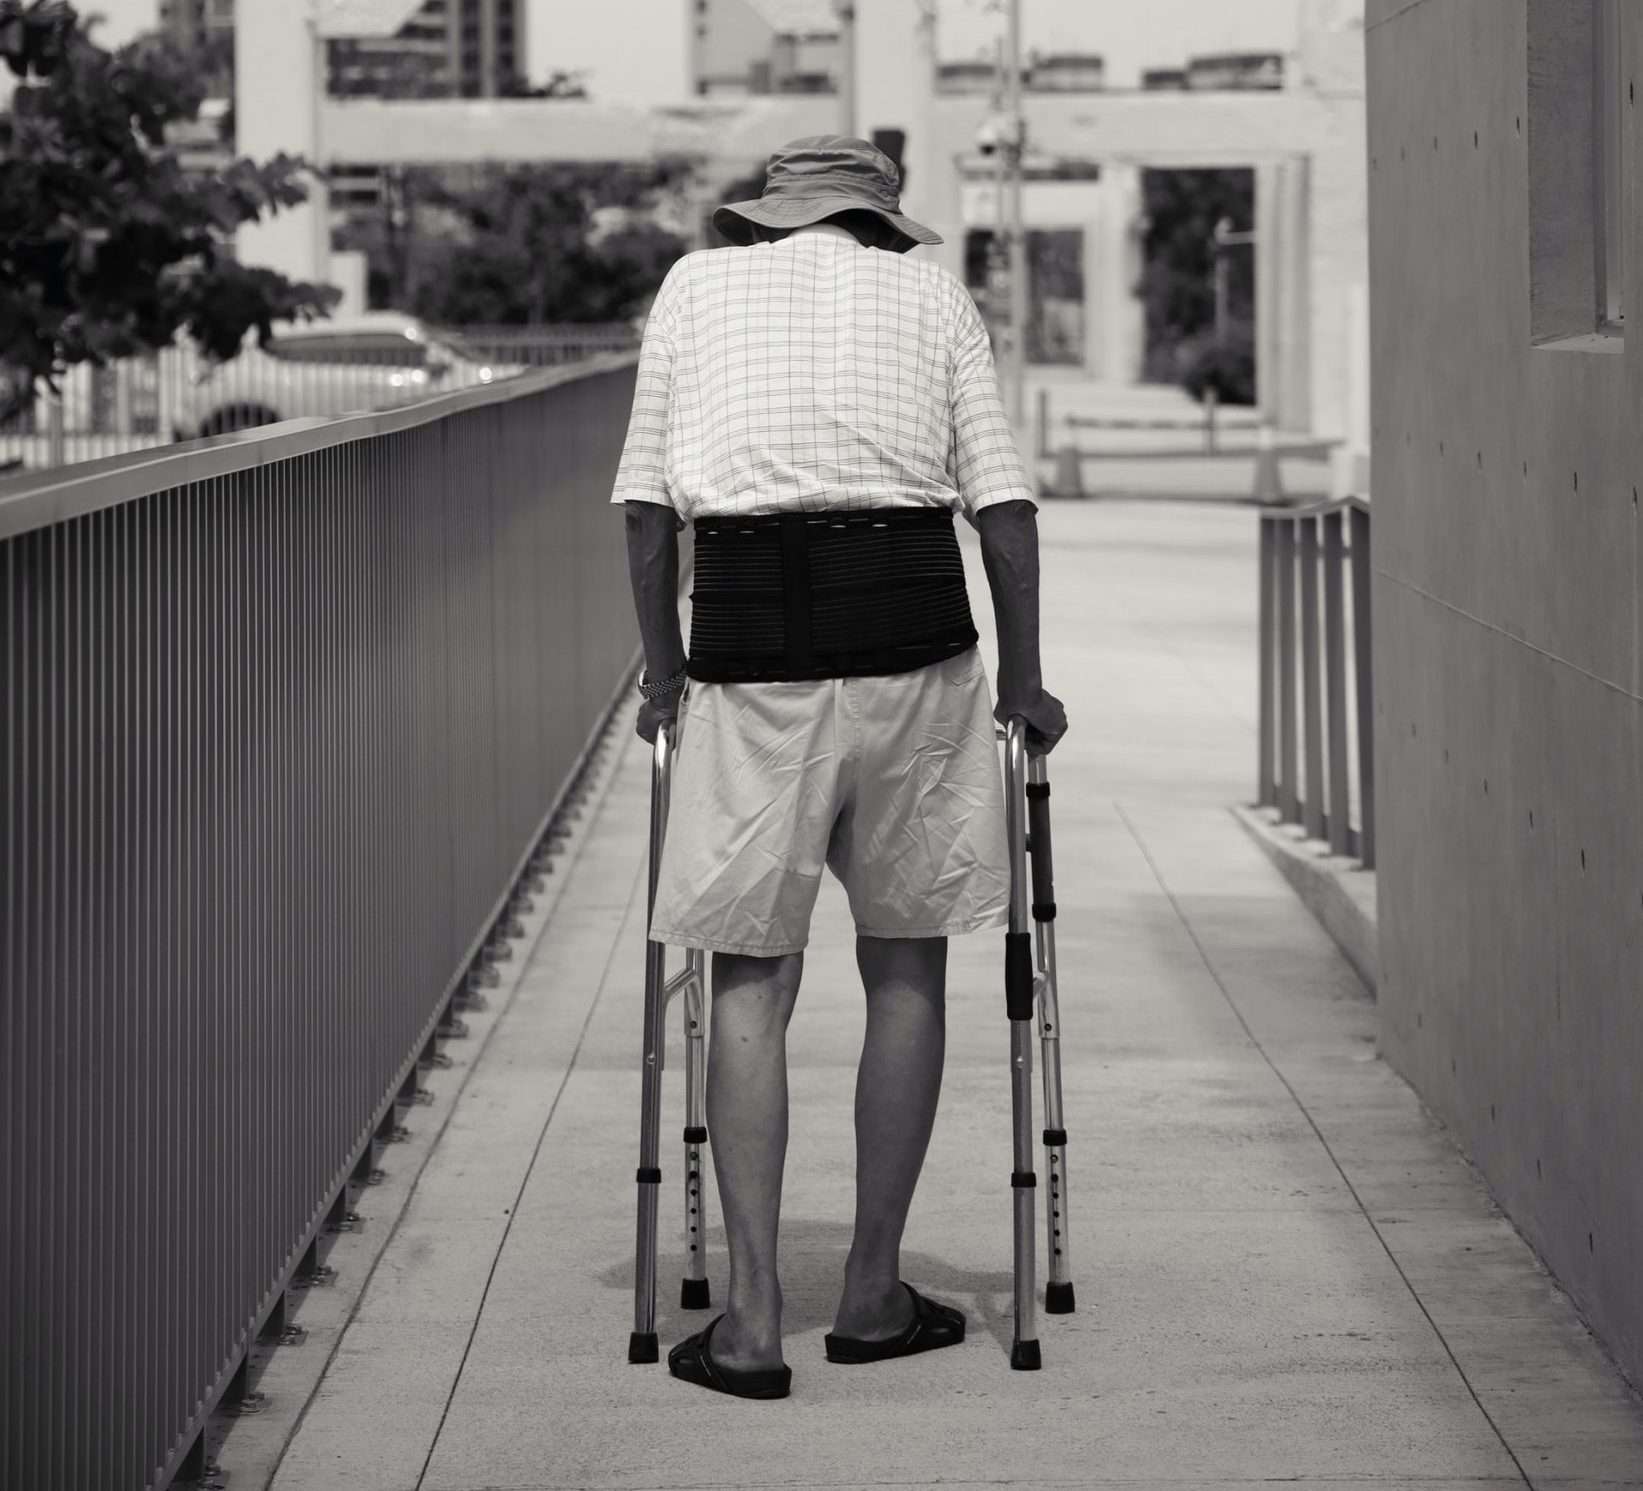 An elderly man walking alway using a walking frame.